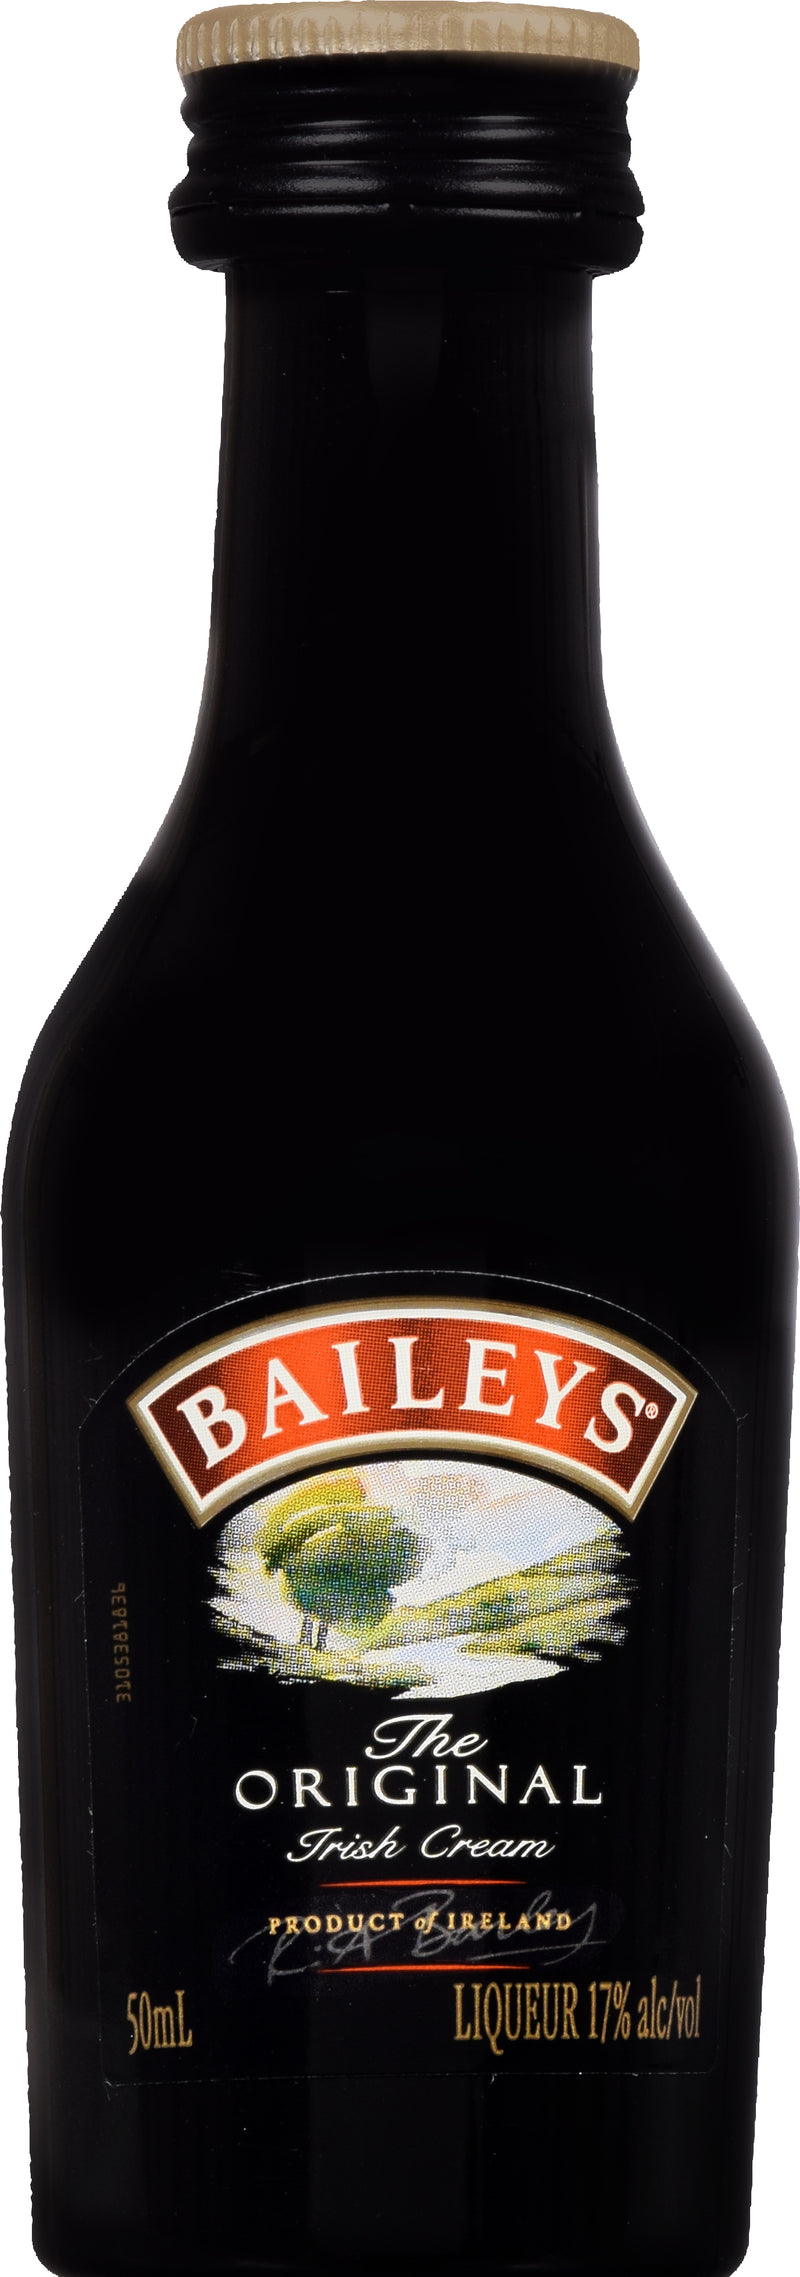 Baileys Original Irish Cream & Flavors Gift